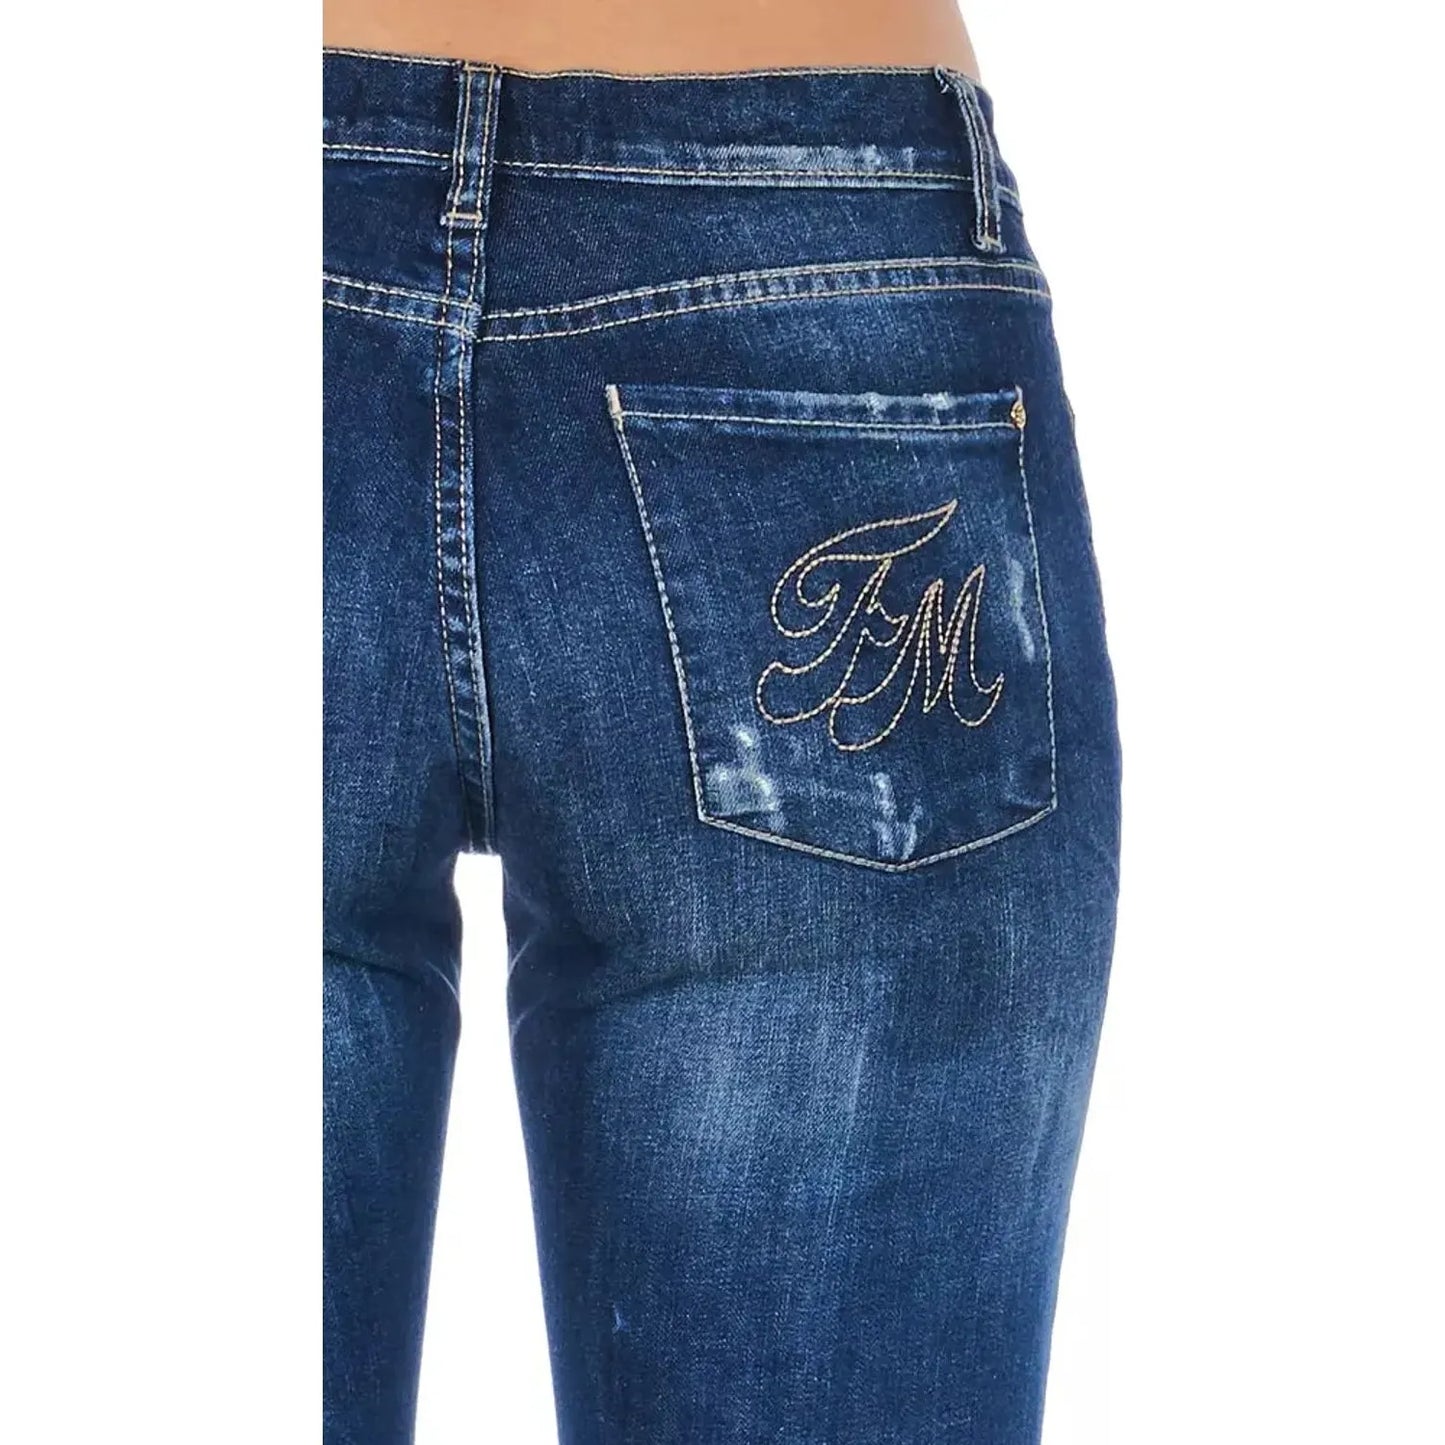 Frankie Morello Chic Worn Wash Skinny Denim Jeans blue-cotton-jeans-pant-52 stock_product_image_21764_1528532271-22-68db4f63-66b.webp